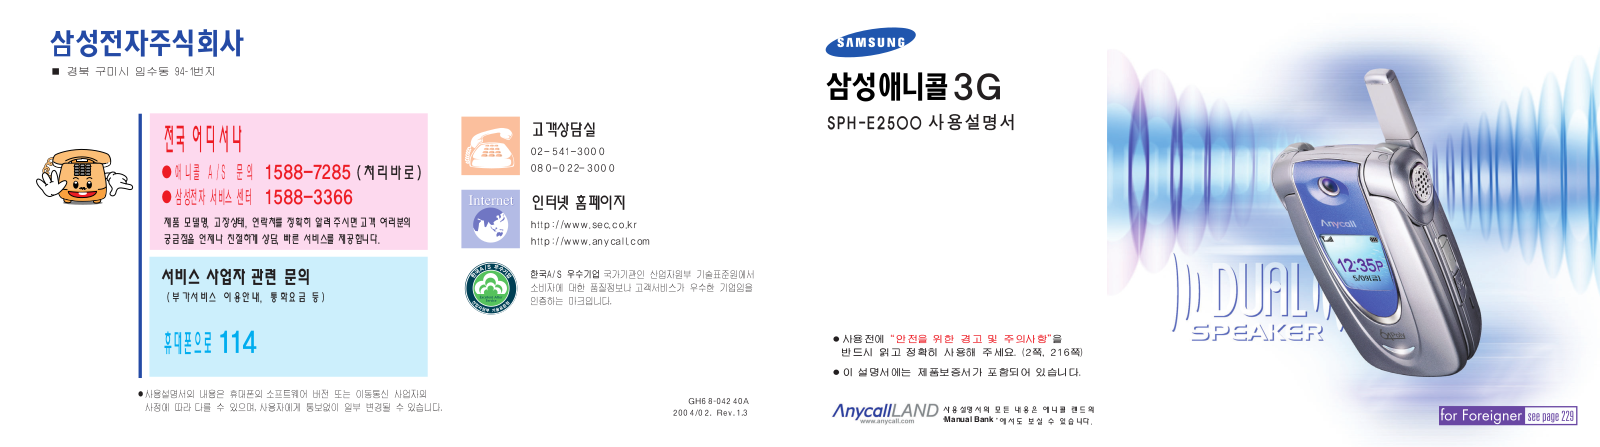 Samsung SPH-E2500 User Manual